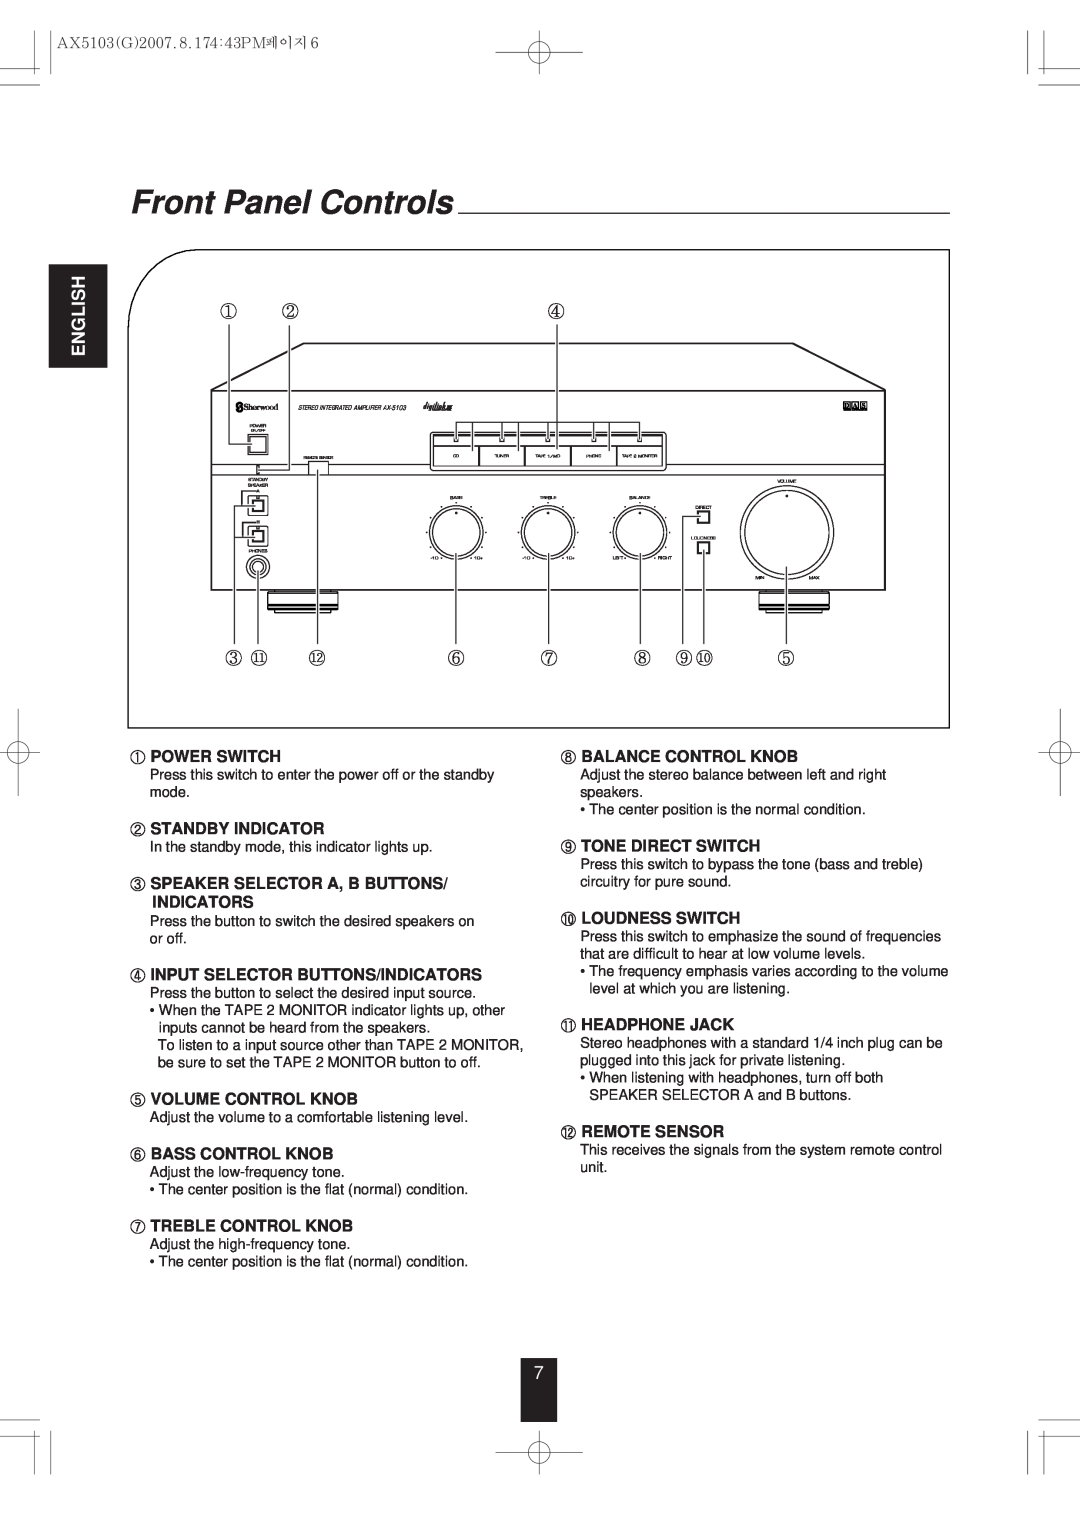 Sherwood AX-5103 dimensions Front Panel Controls, English 